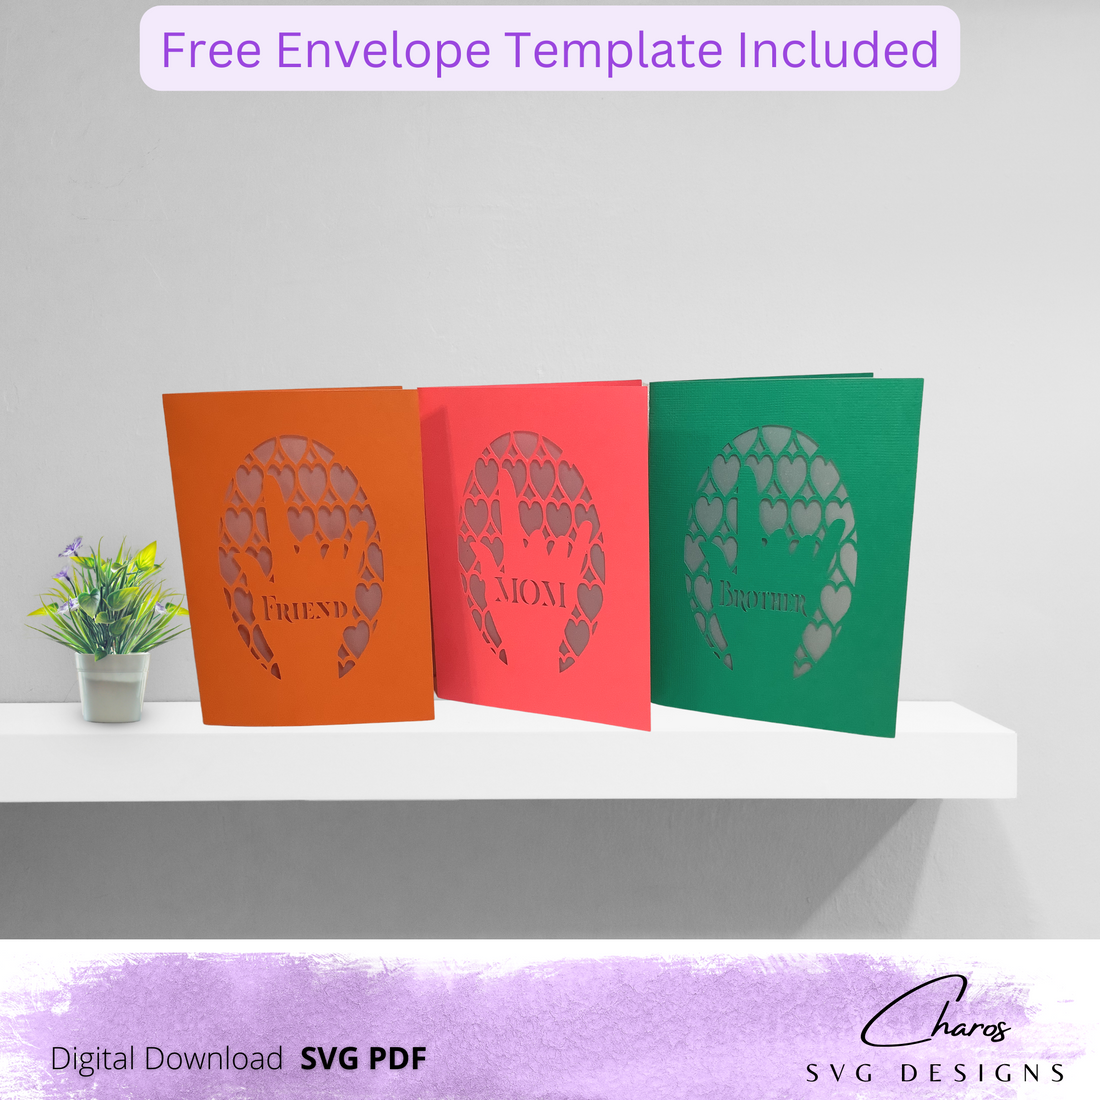 SVG: I Love You in Sign Language | Mega Greeting Card Bundle with Free Envelope Template | Cricut Cut File